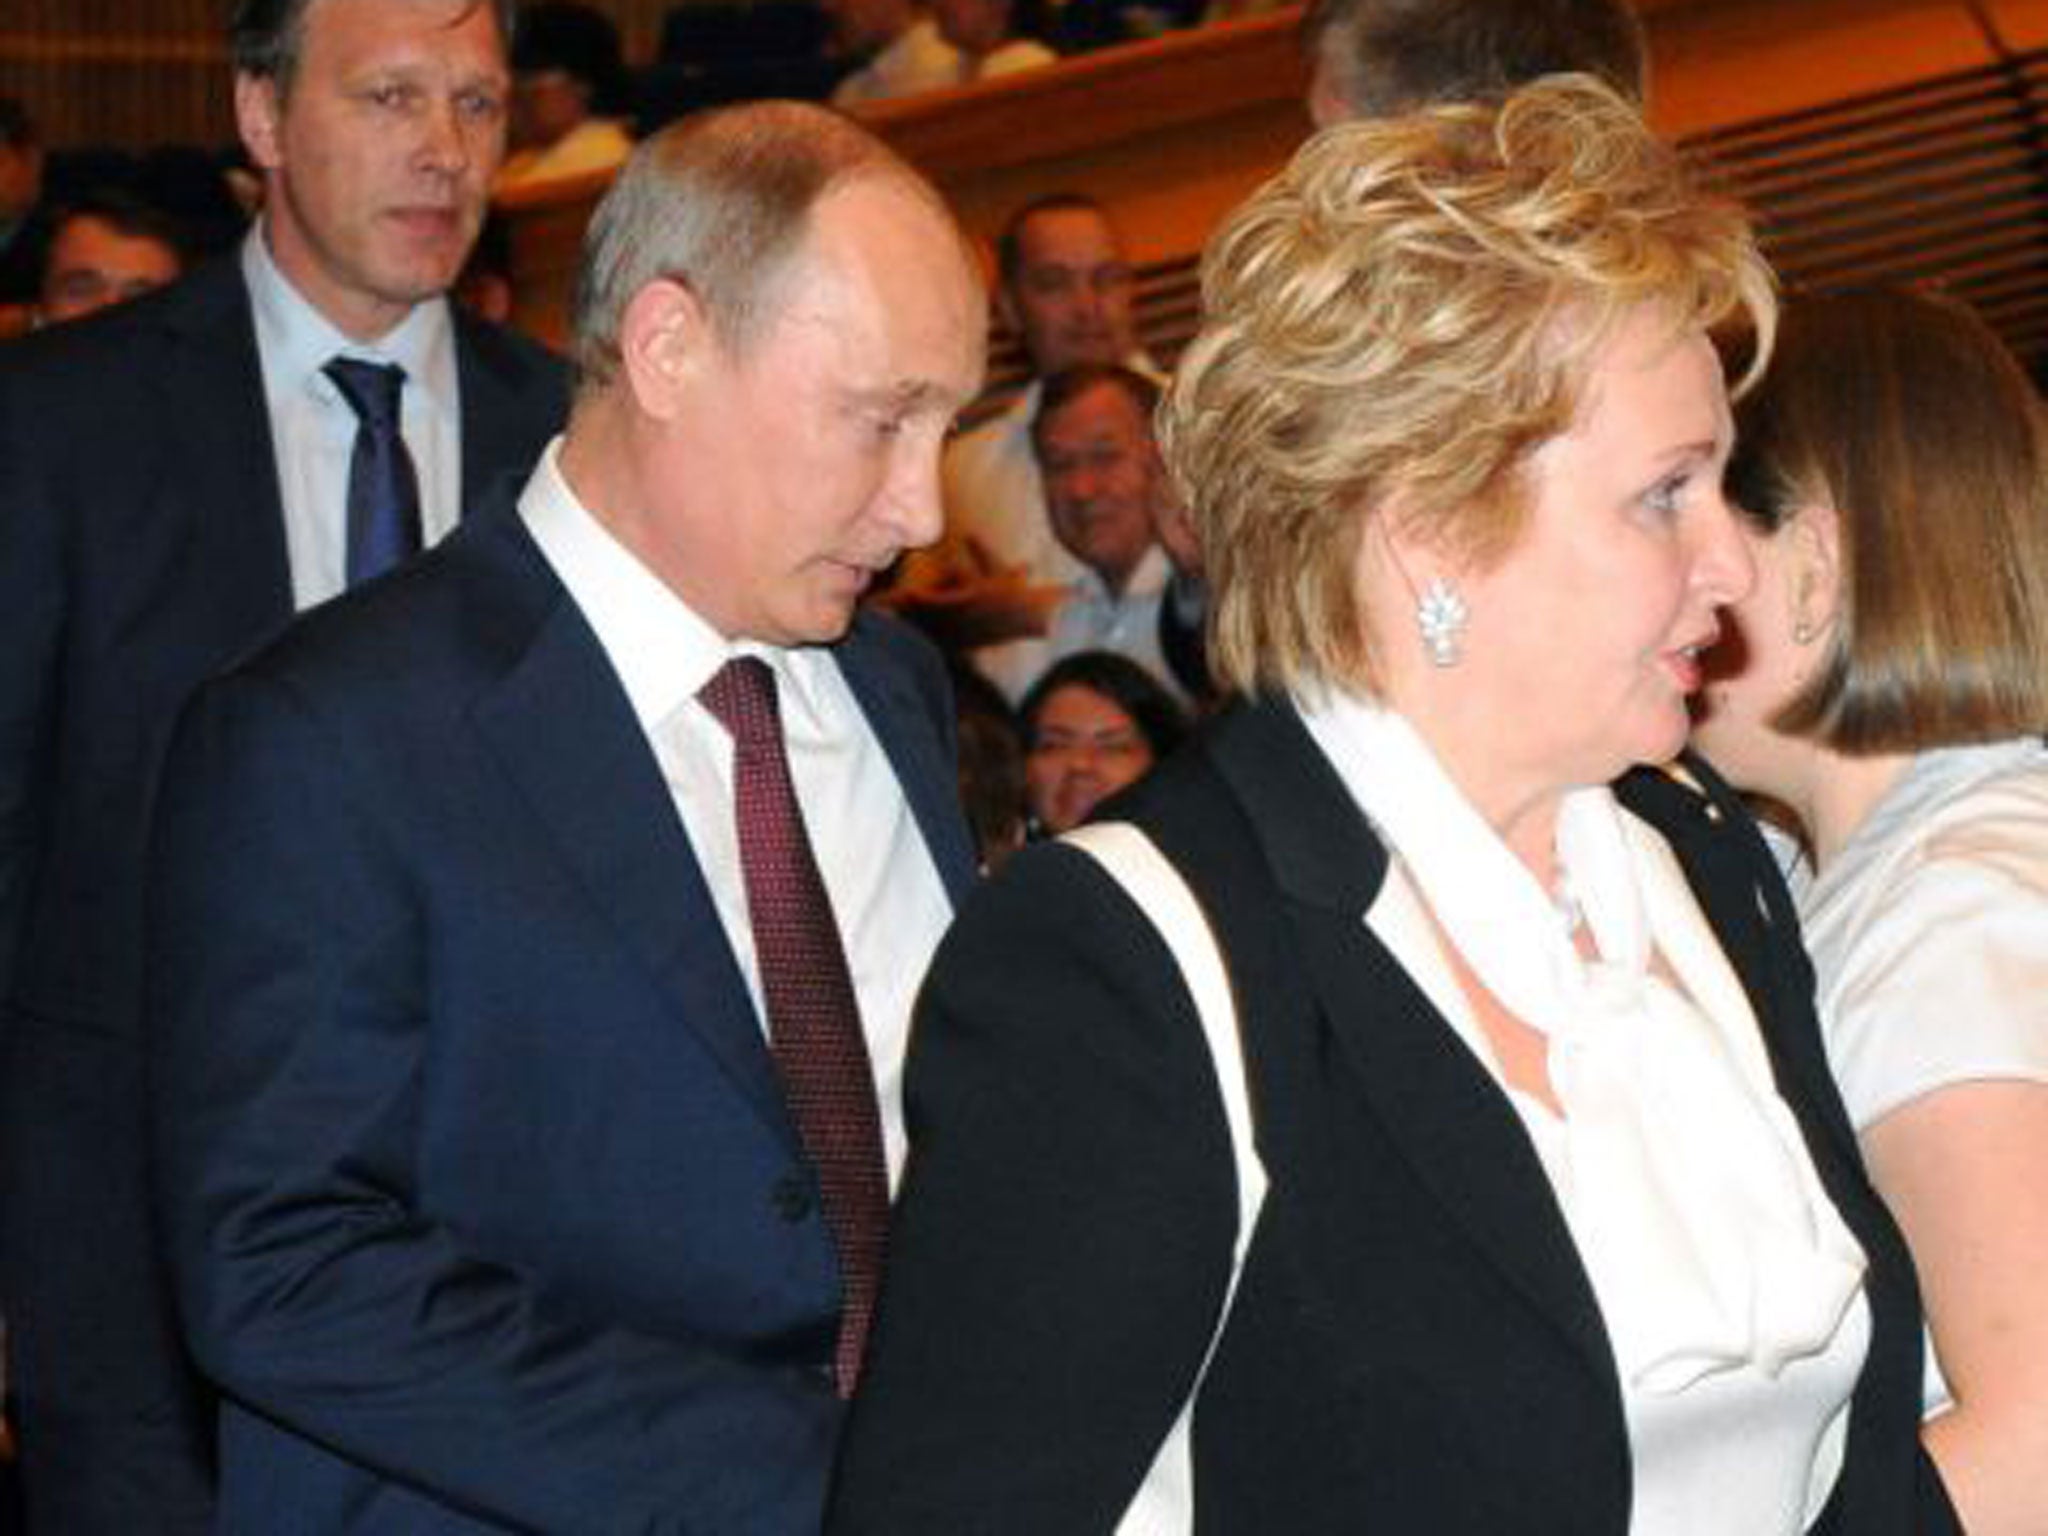 Vladimir Putin with Lyudmila at the ballet on Thursday